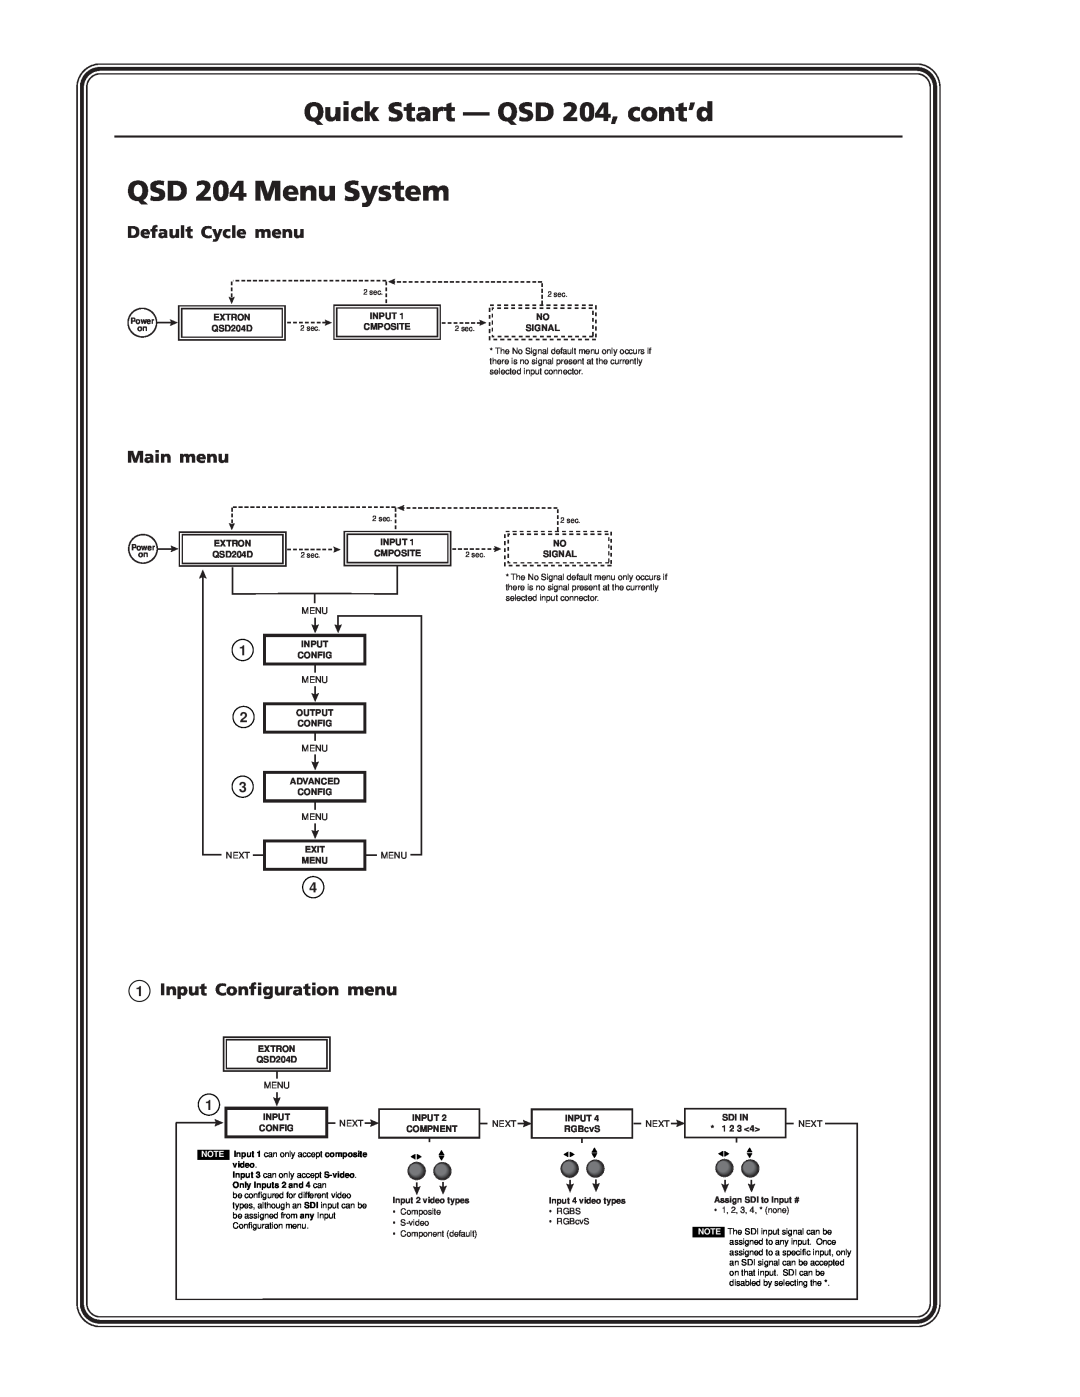 Extron electronic QSD 204 D manual QSD 204 Menu System, Quick Start - QSD 204, cont’d, Default Cycle menu, Main menu, Next 